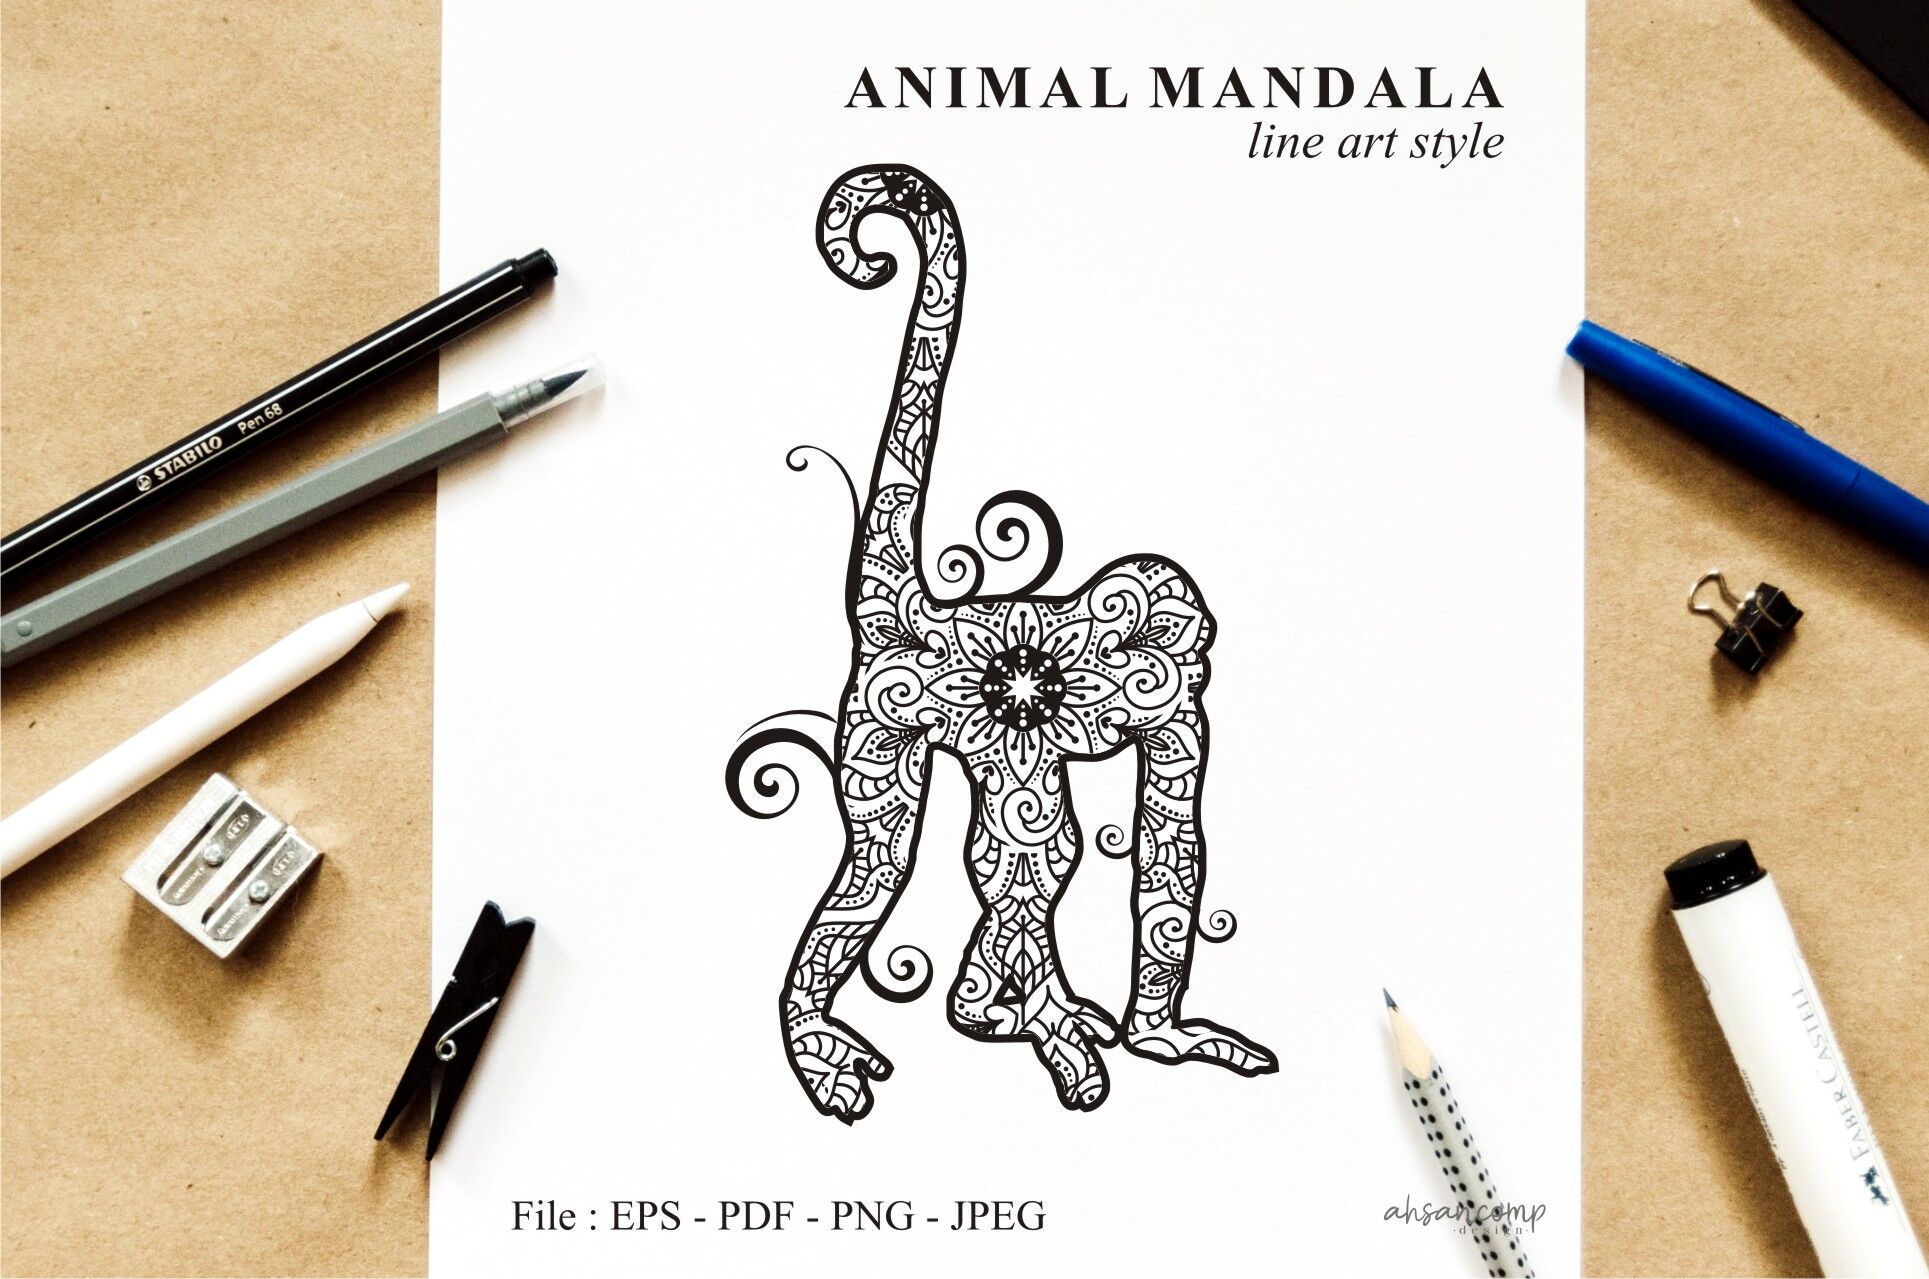 Download Monkey Mandala Vector Line Art Style 03 By Ahsancomp Studio | TheHungryJPEG.com